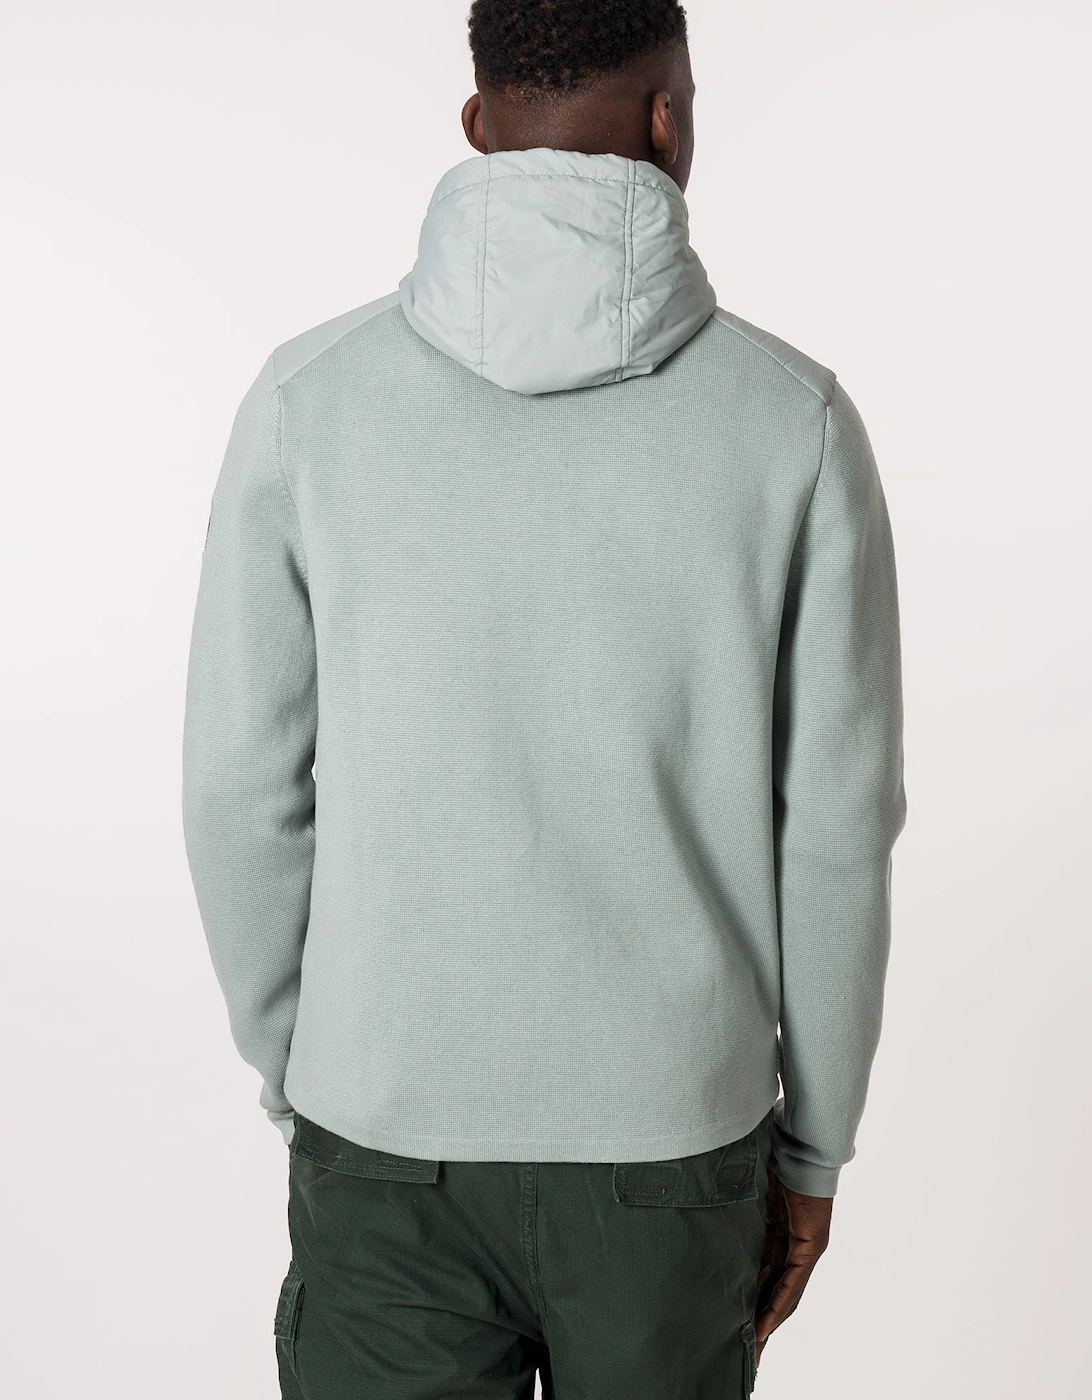 Vert Zip Through Hooded Hybrid jacket